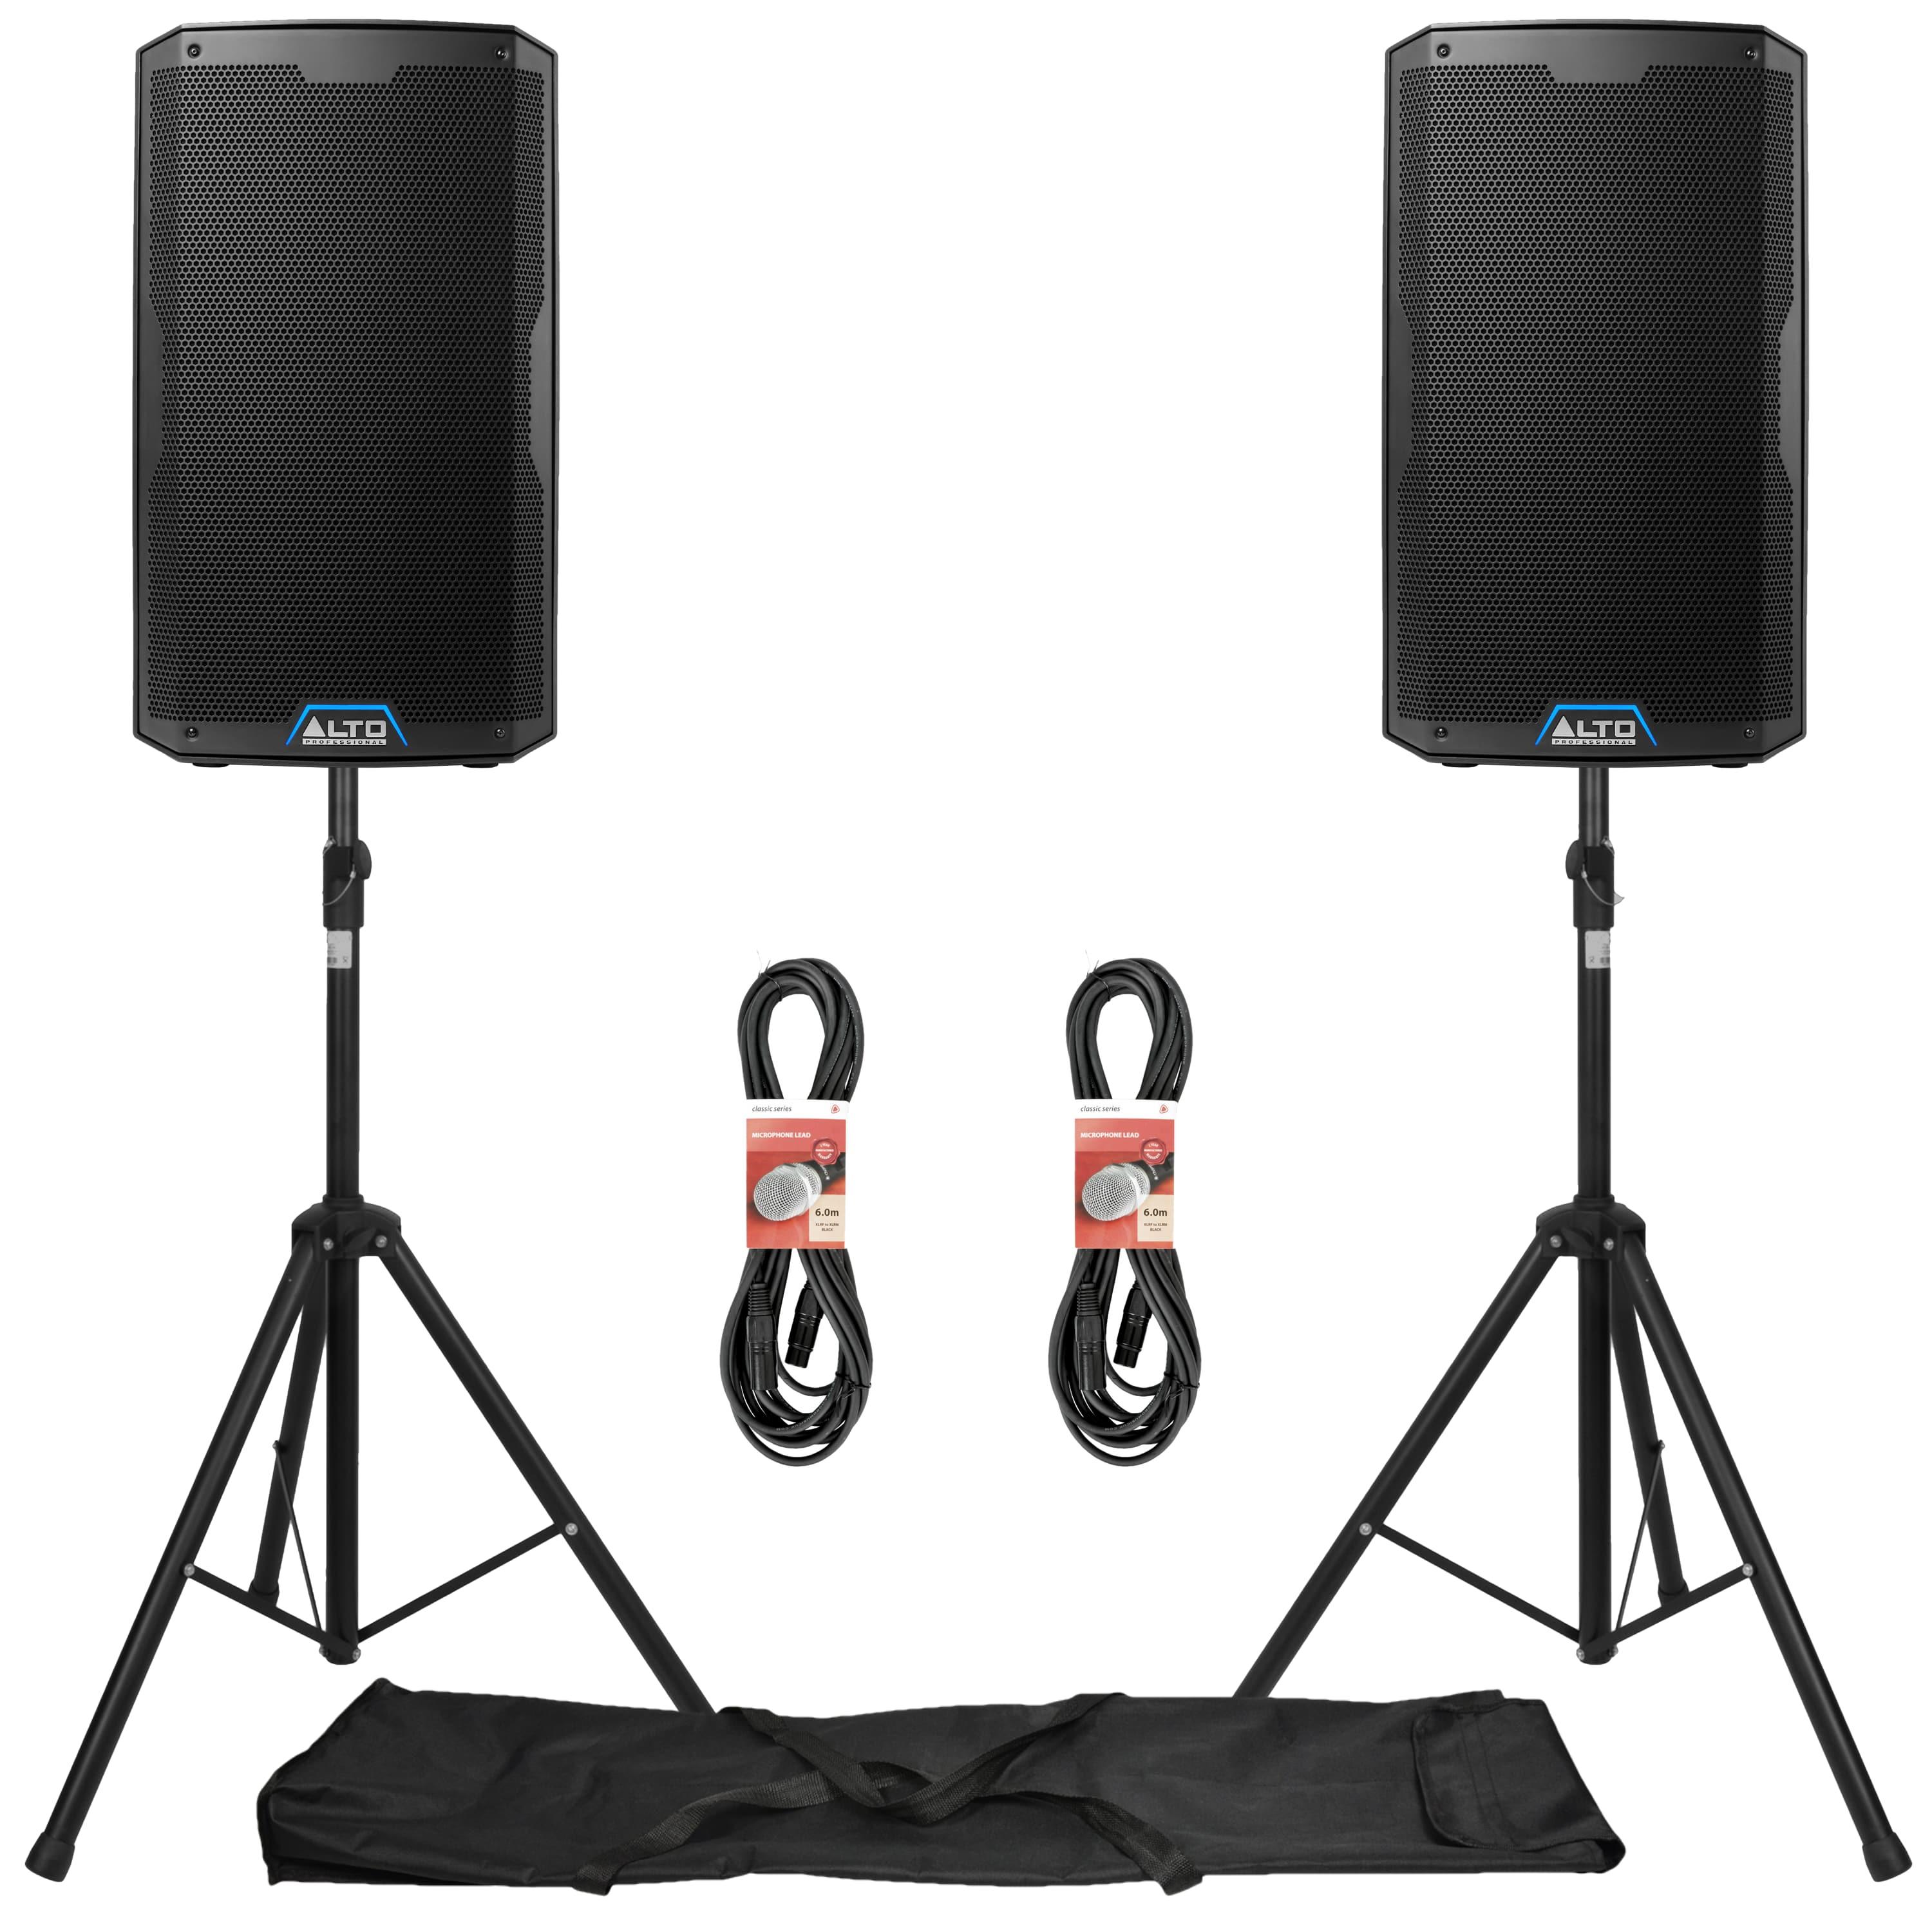 Alto Professional TS412 Speaker Package